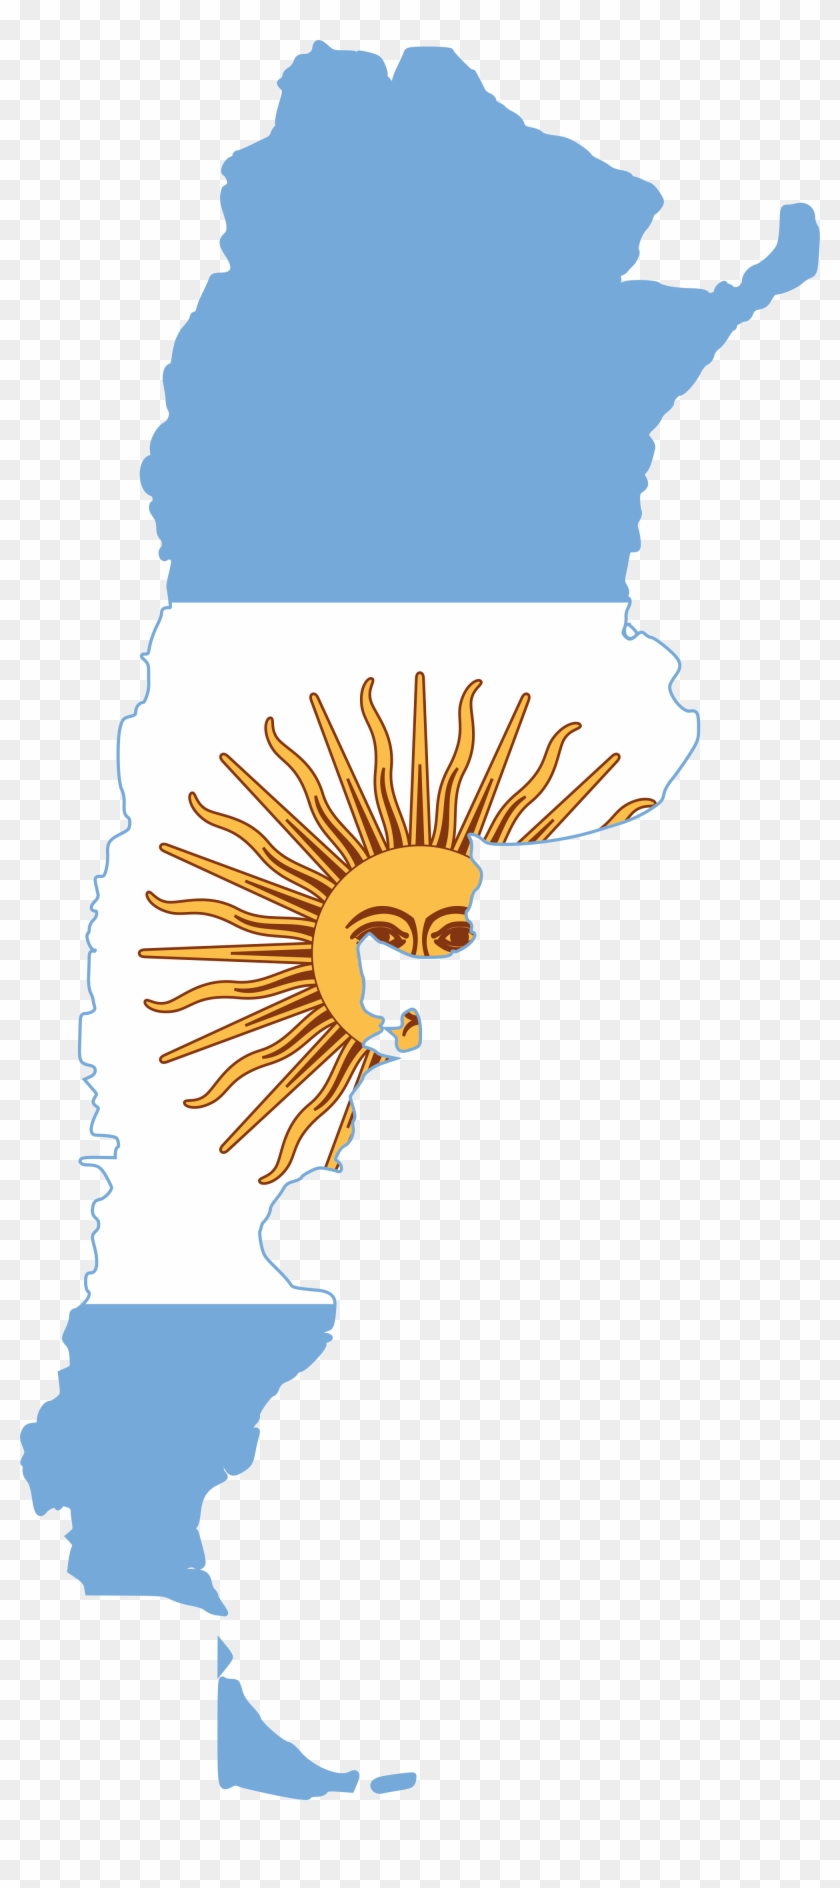 Argentina Clipart - Argentina Bandera Y Pais #724723